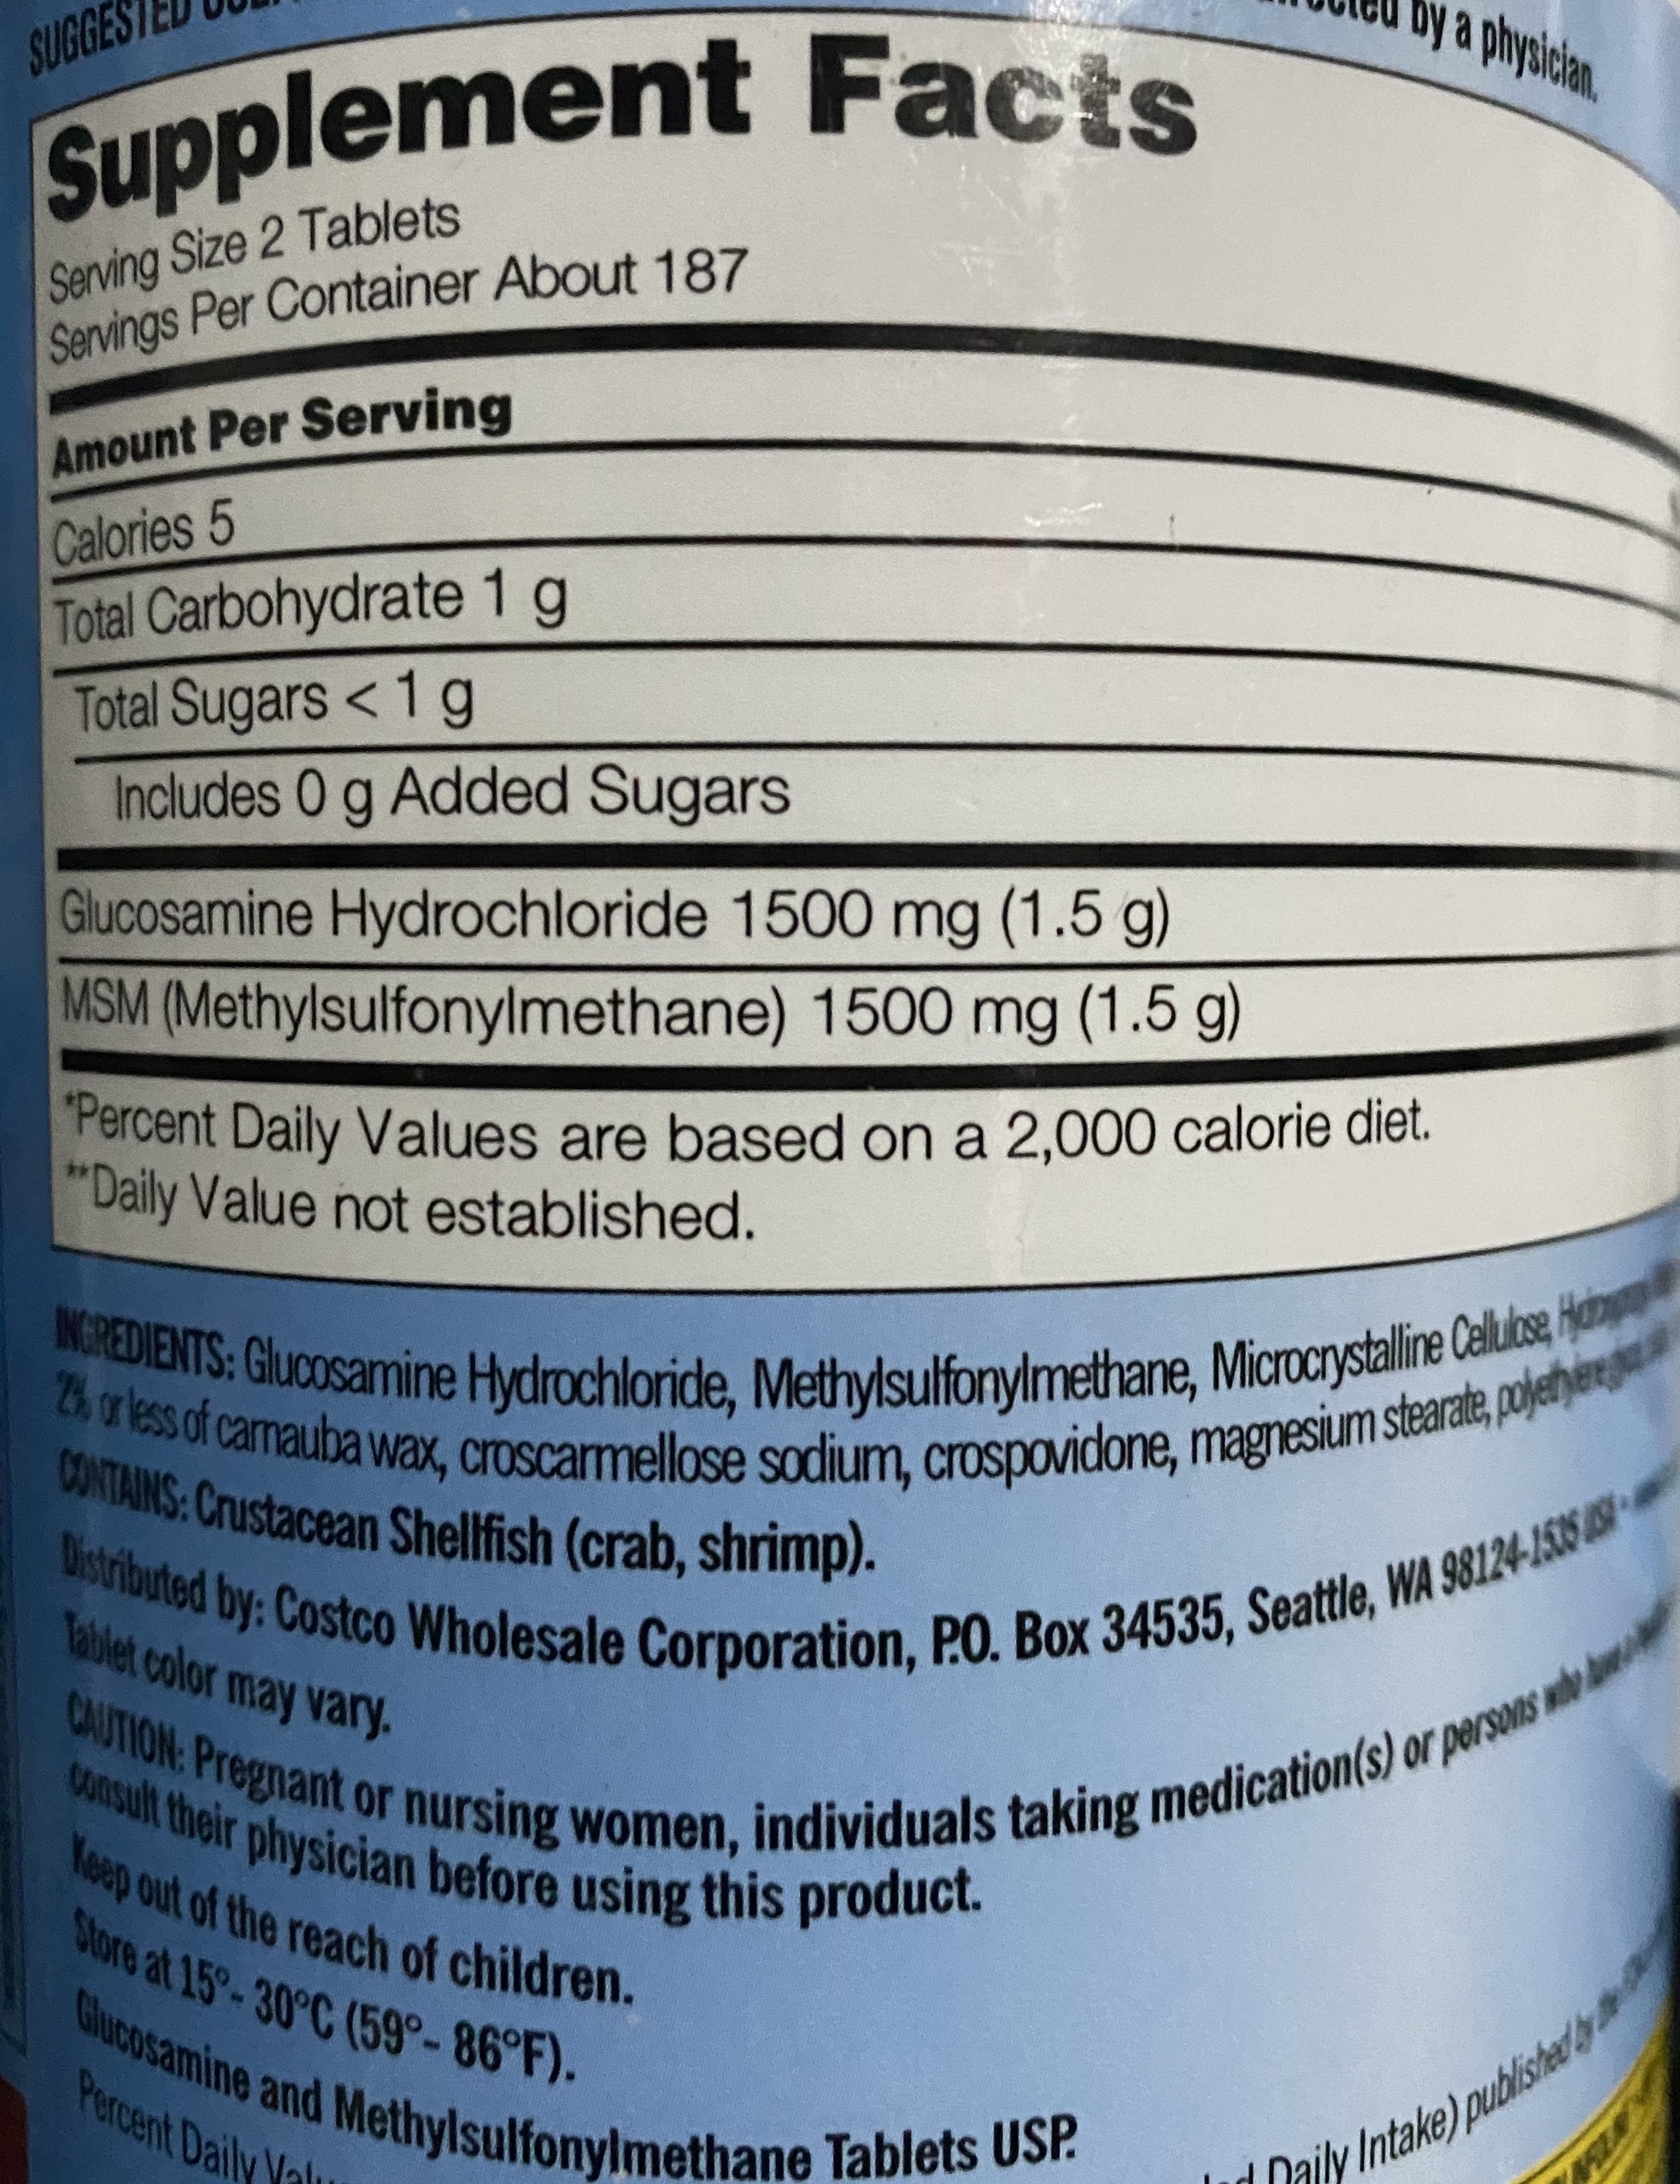 Kirkland Glucosamine Hcl 1500MG With MSM 1500MG, 375 Tablets